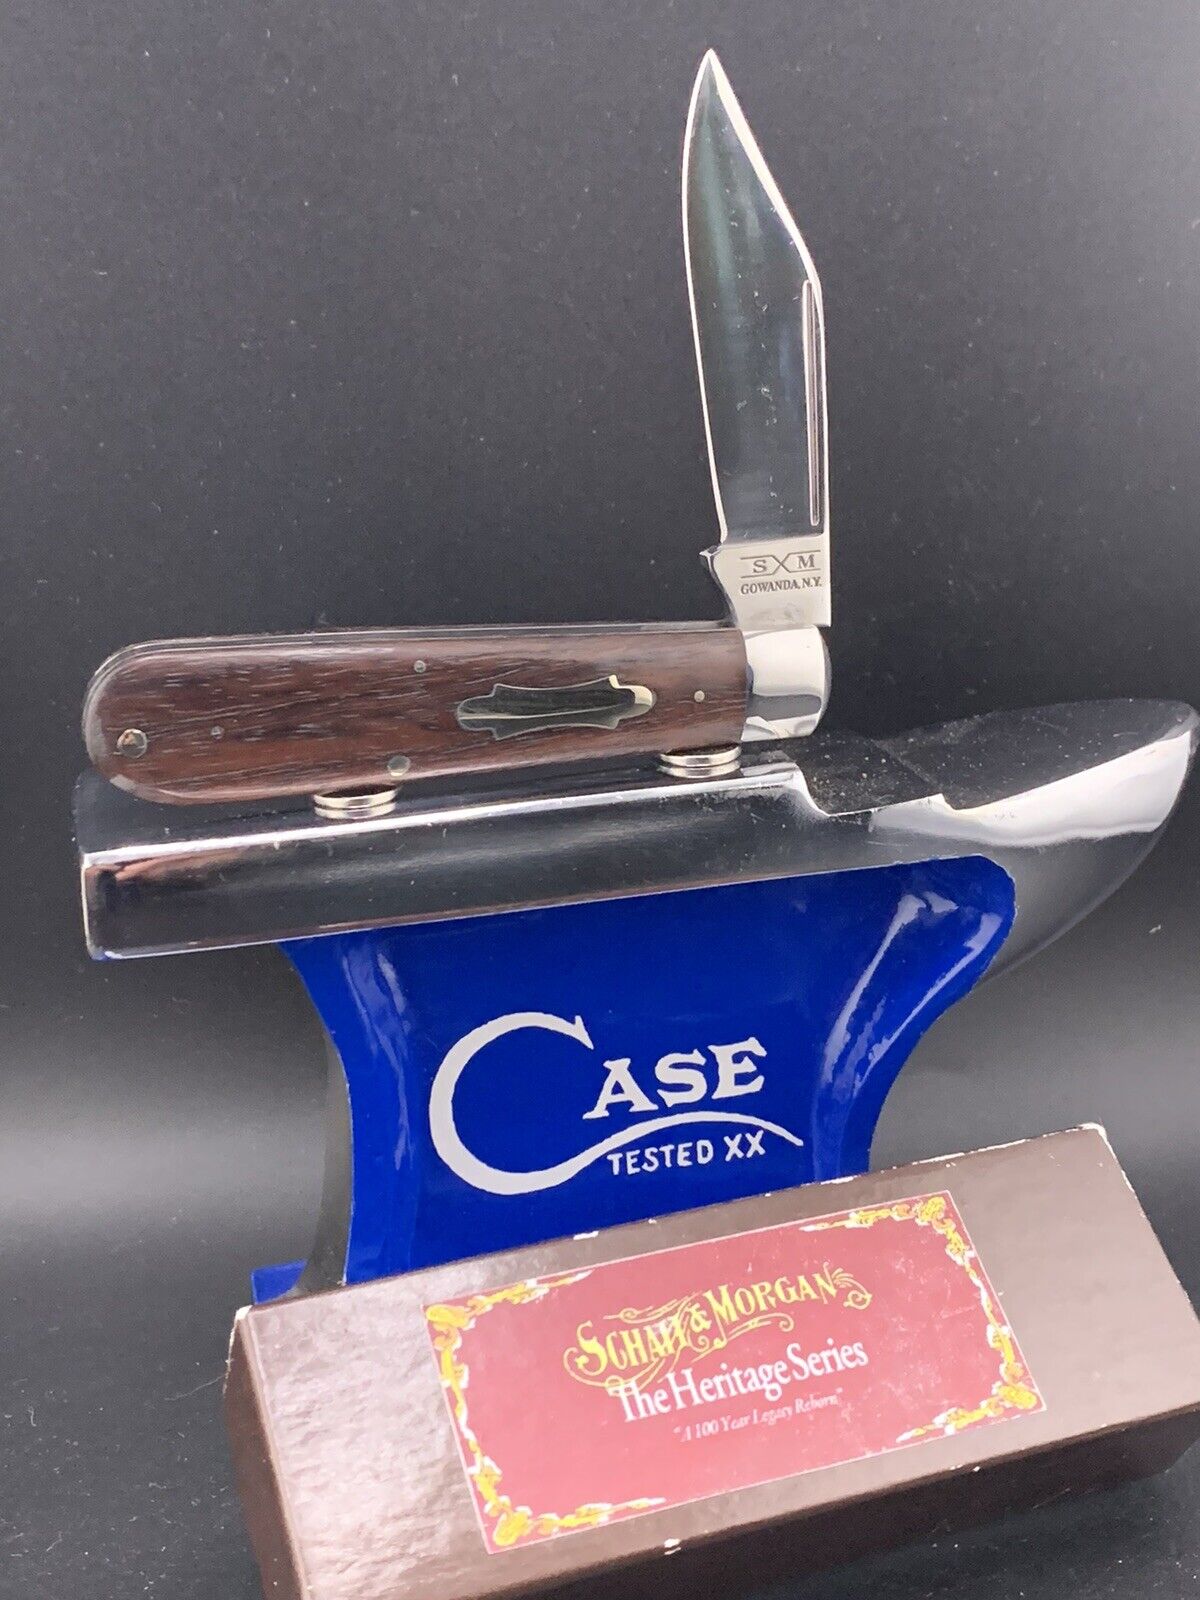 Schatt & Morgan Heritage Series 1195 Rosewood Jack Pocket Knife